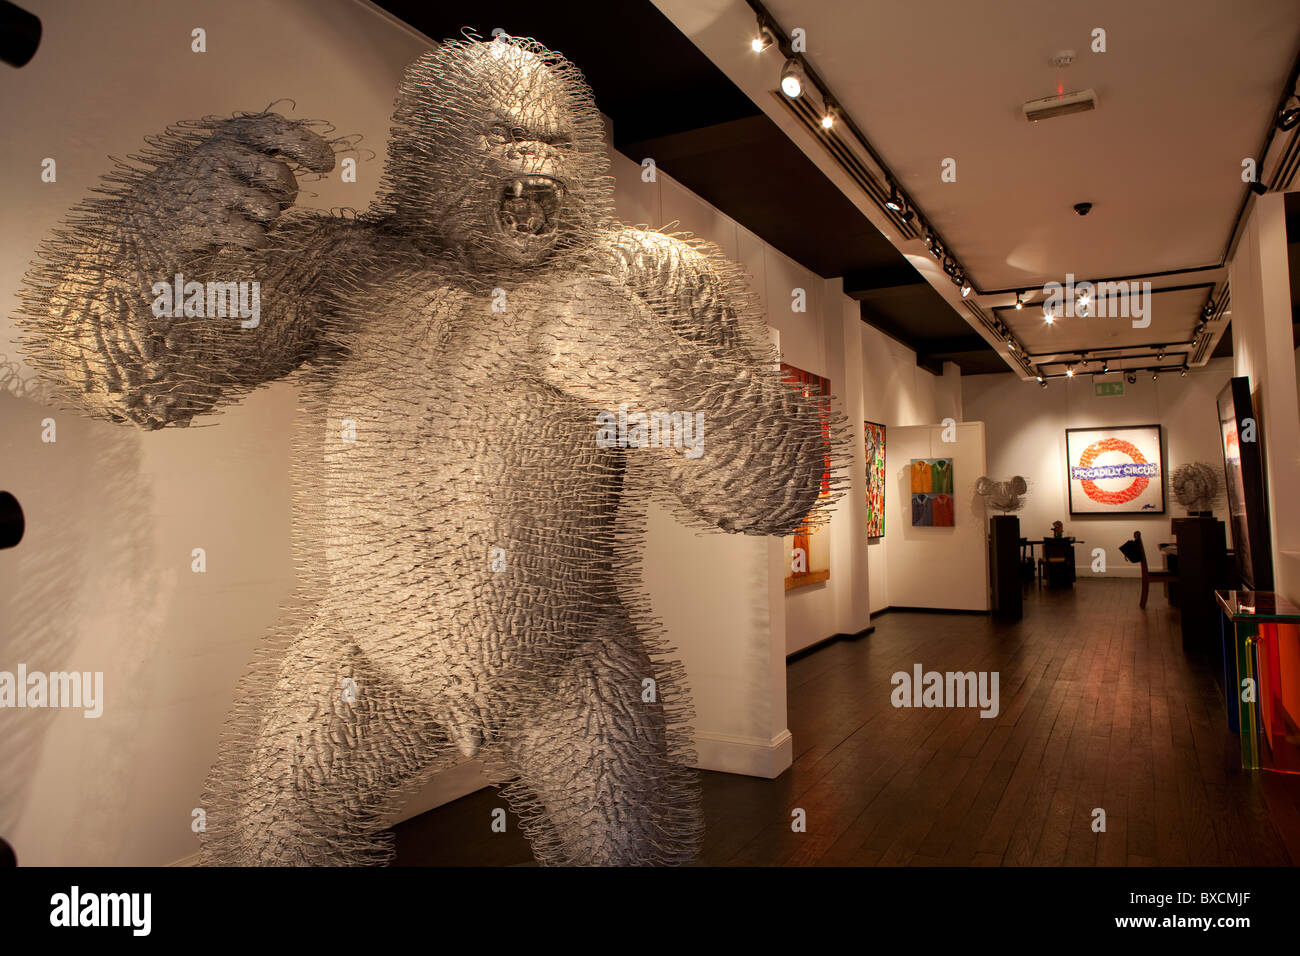 The Opera gallery in New Bond Street, London. Gorilla made of coat hangers by artist David Mach. Stock Photo